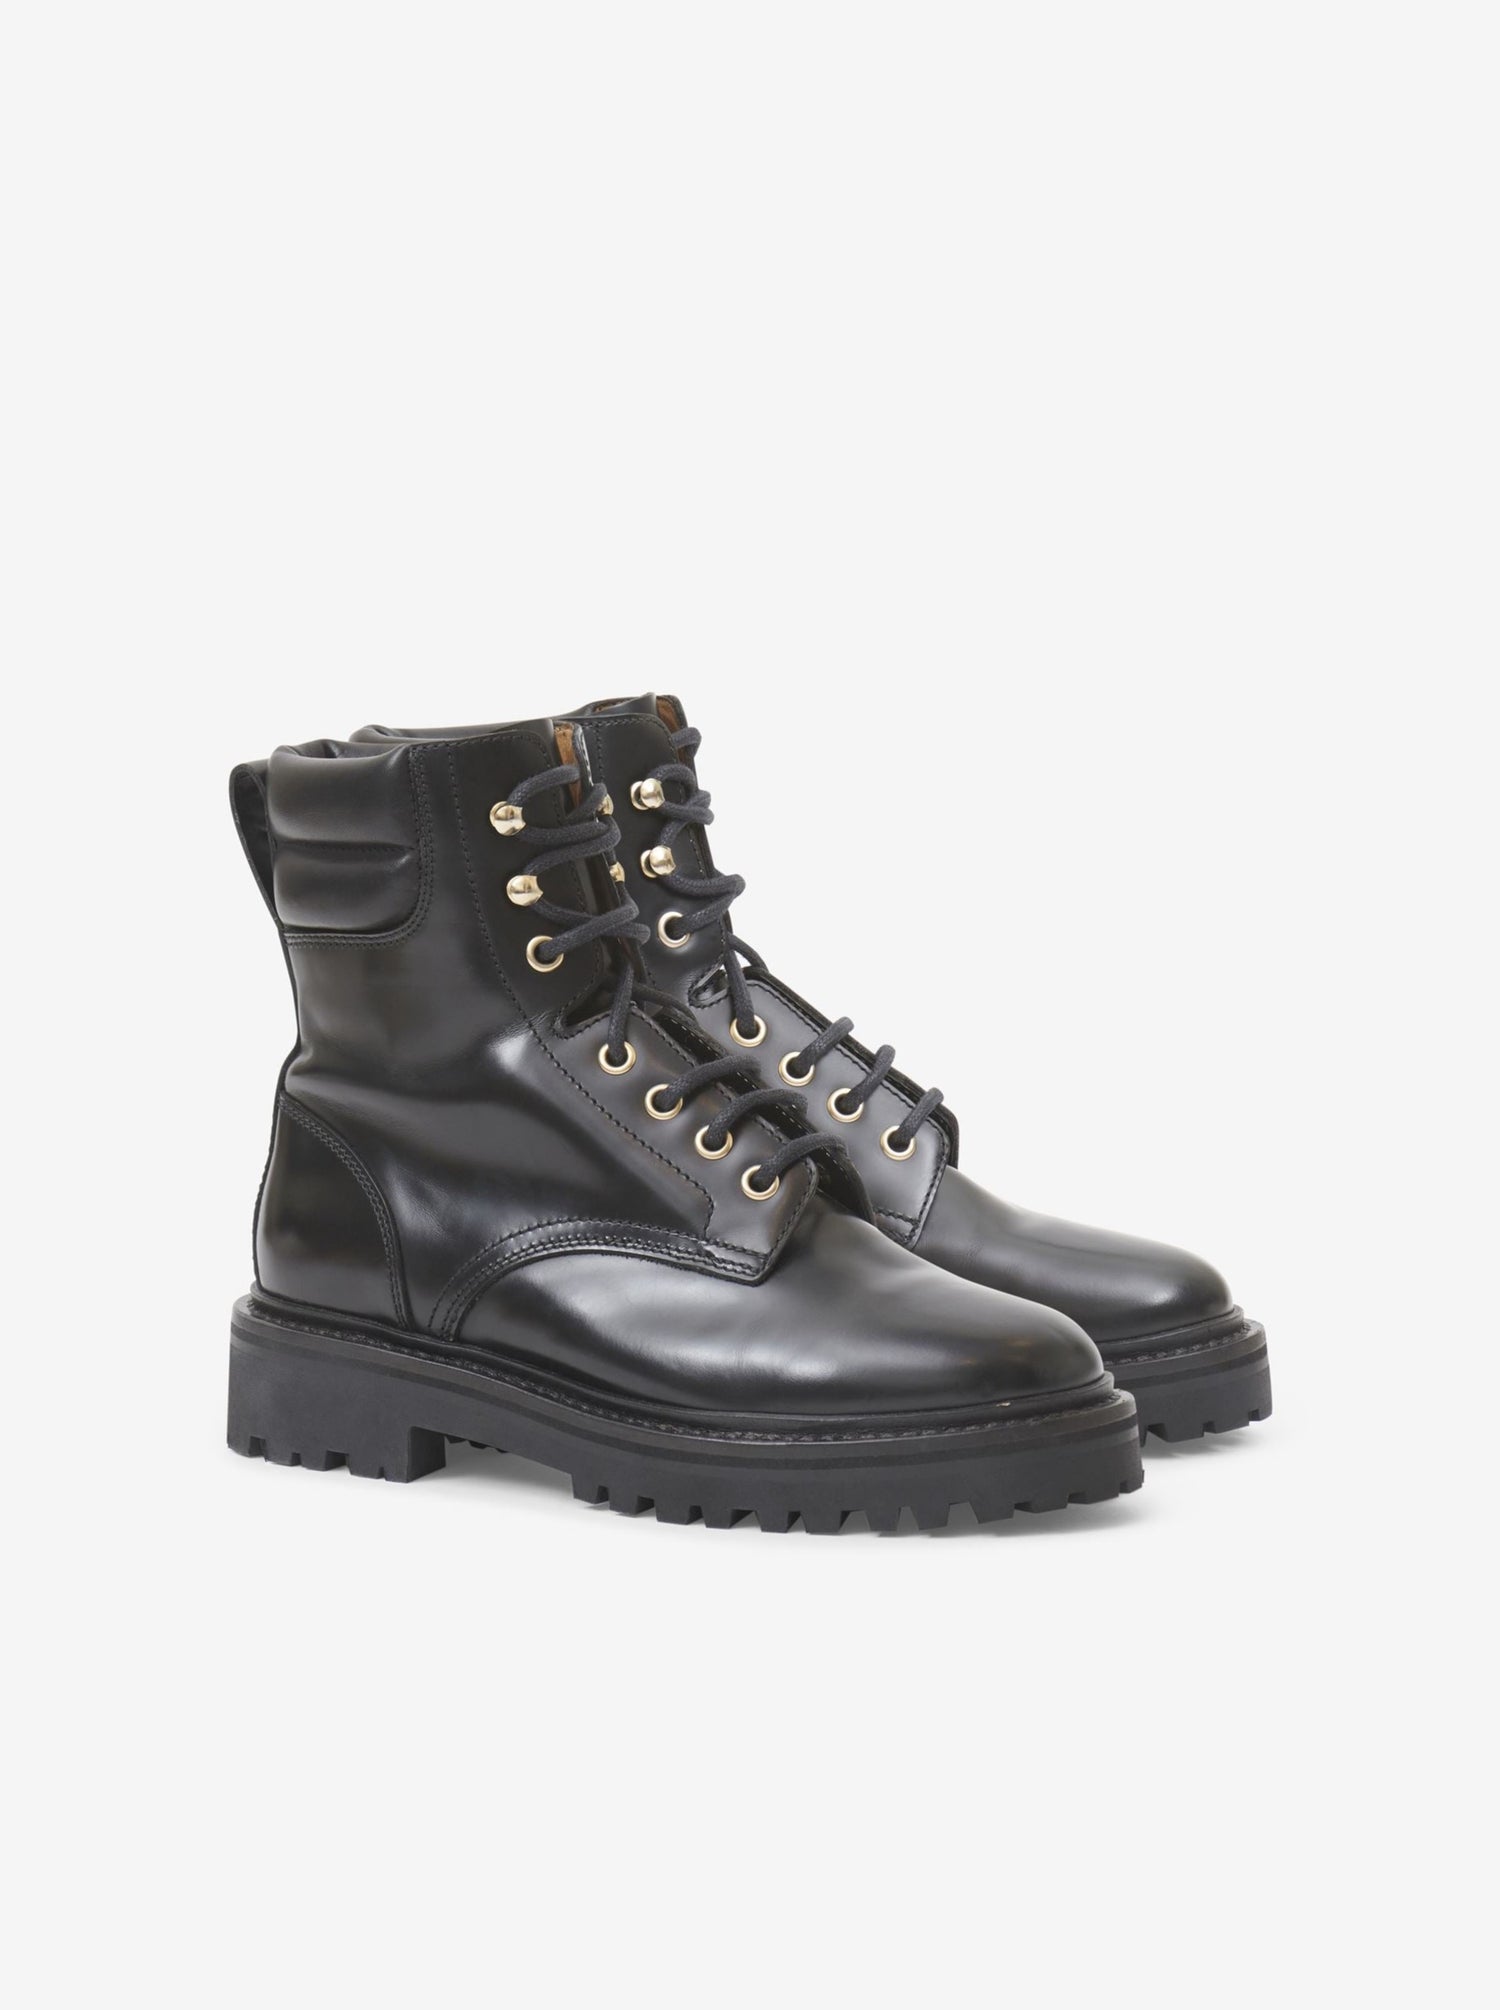 CAMPA boots, black